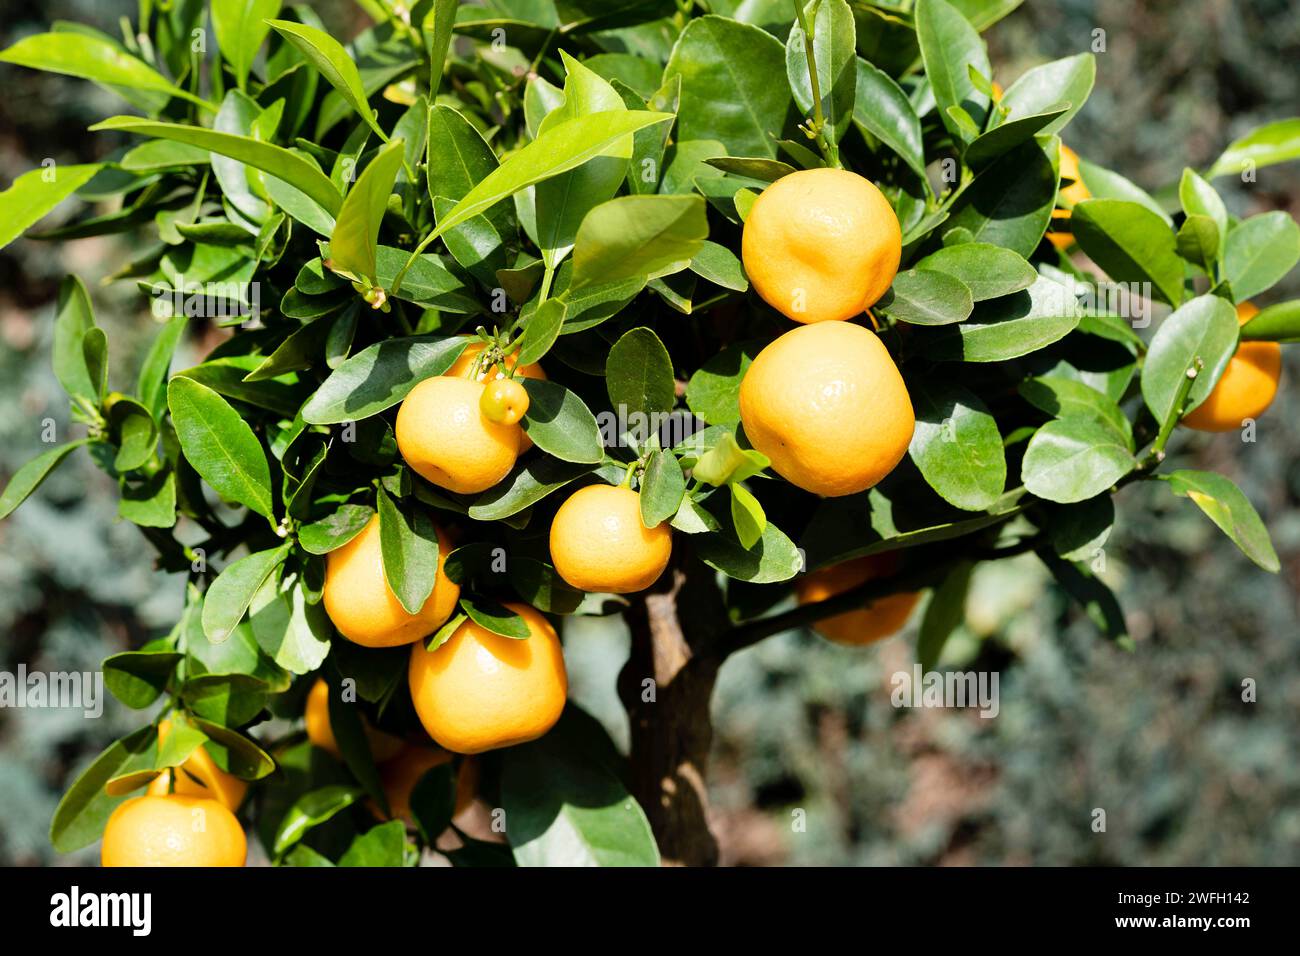 Calamondin, Calomondin, Camalmansi (Citrus madurensis, Citrofortunella microcarpa, Citrus fortunella, Citrus mitis), Potted plant with fruits Stock Photo